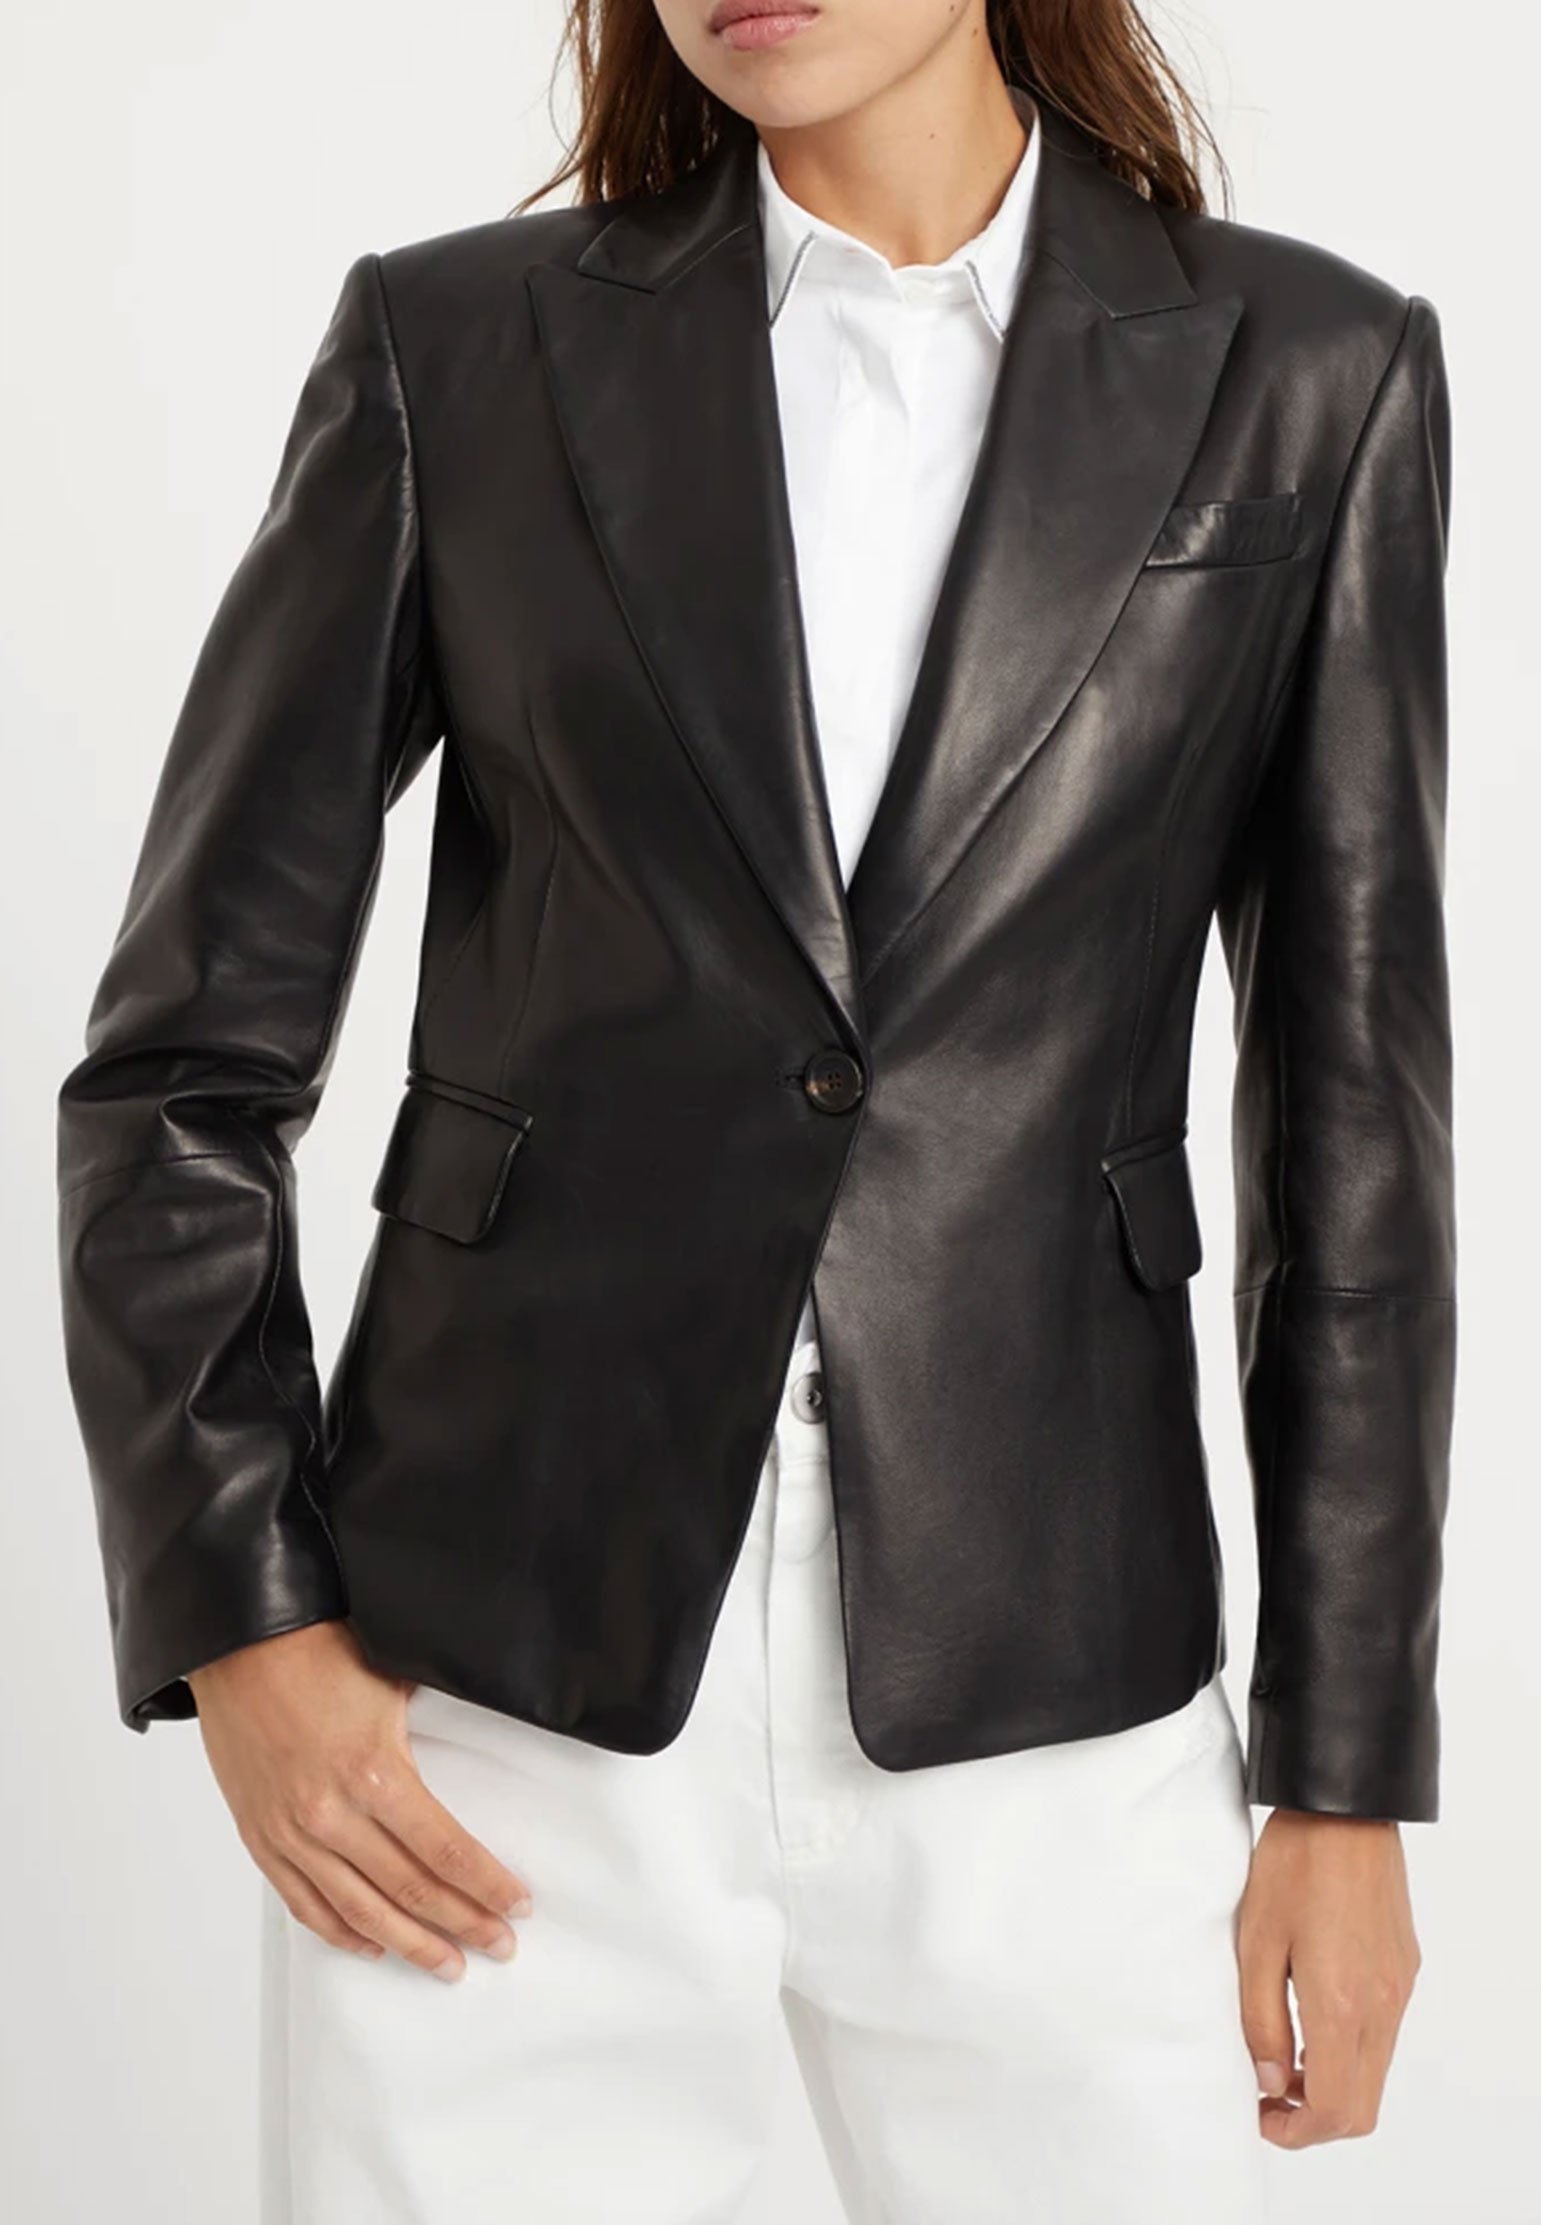 Jacket BRUNELLO CUCINELLI Color: black (Code: 3977) in online store Allure